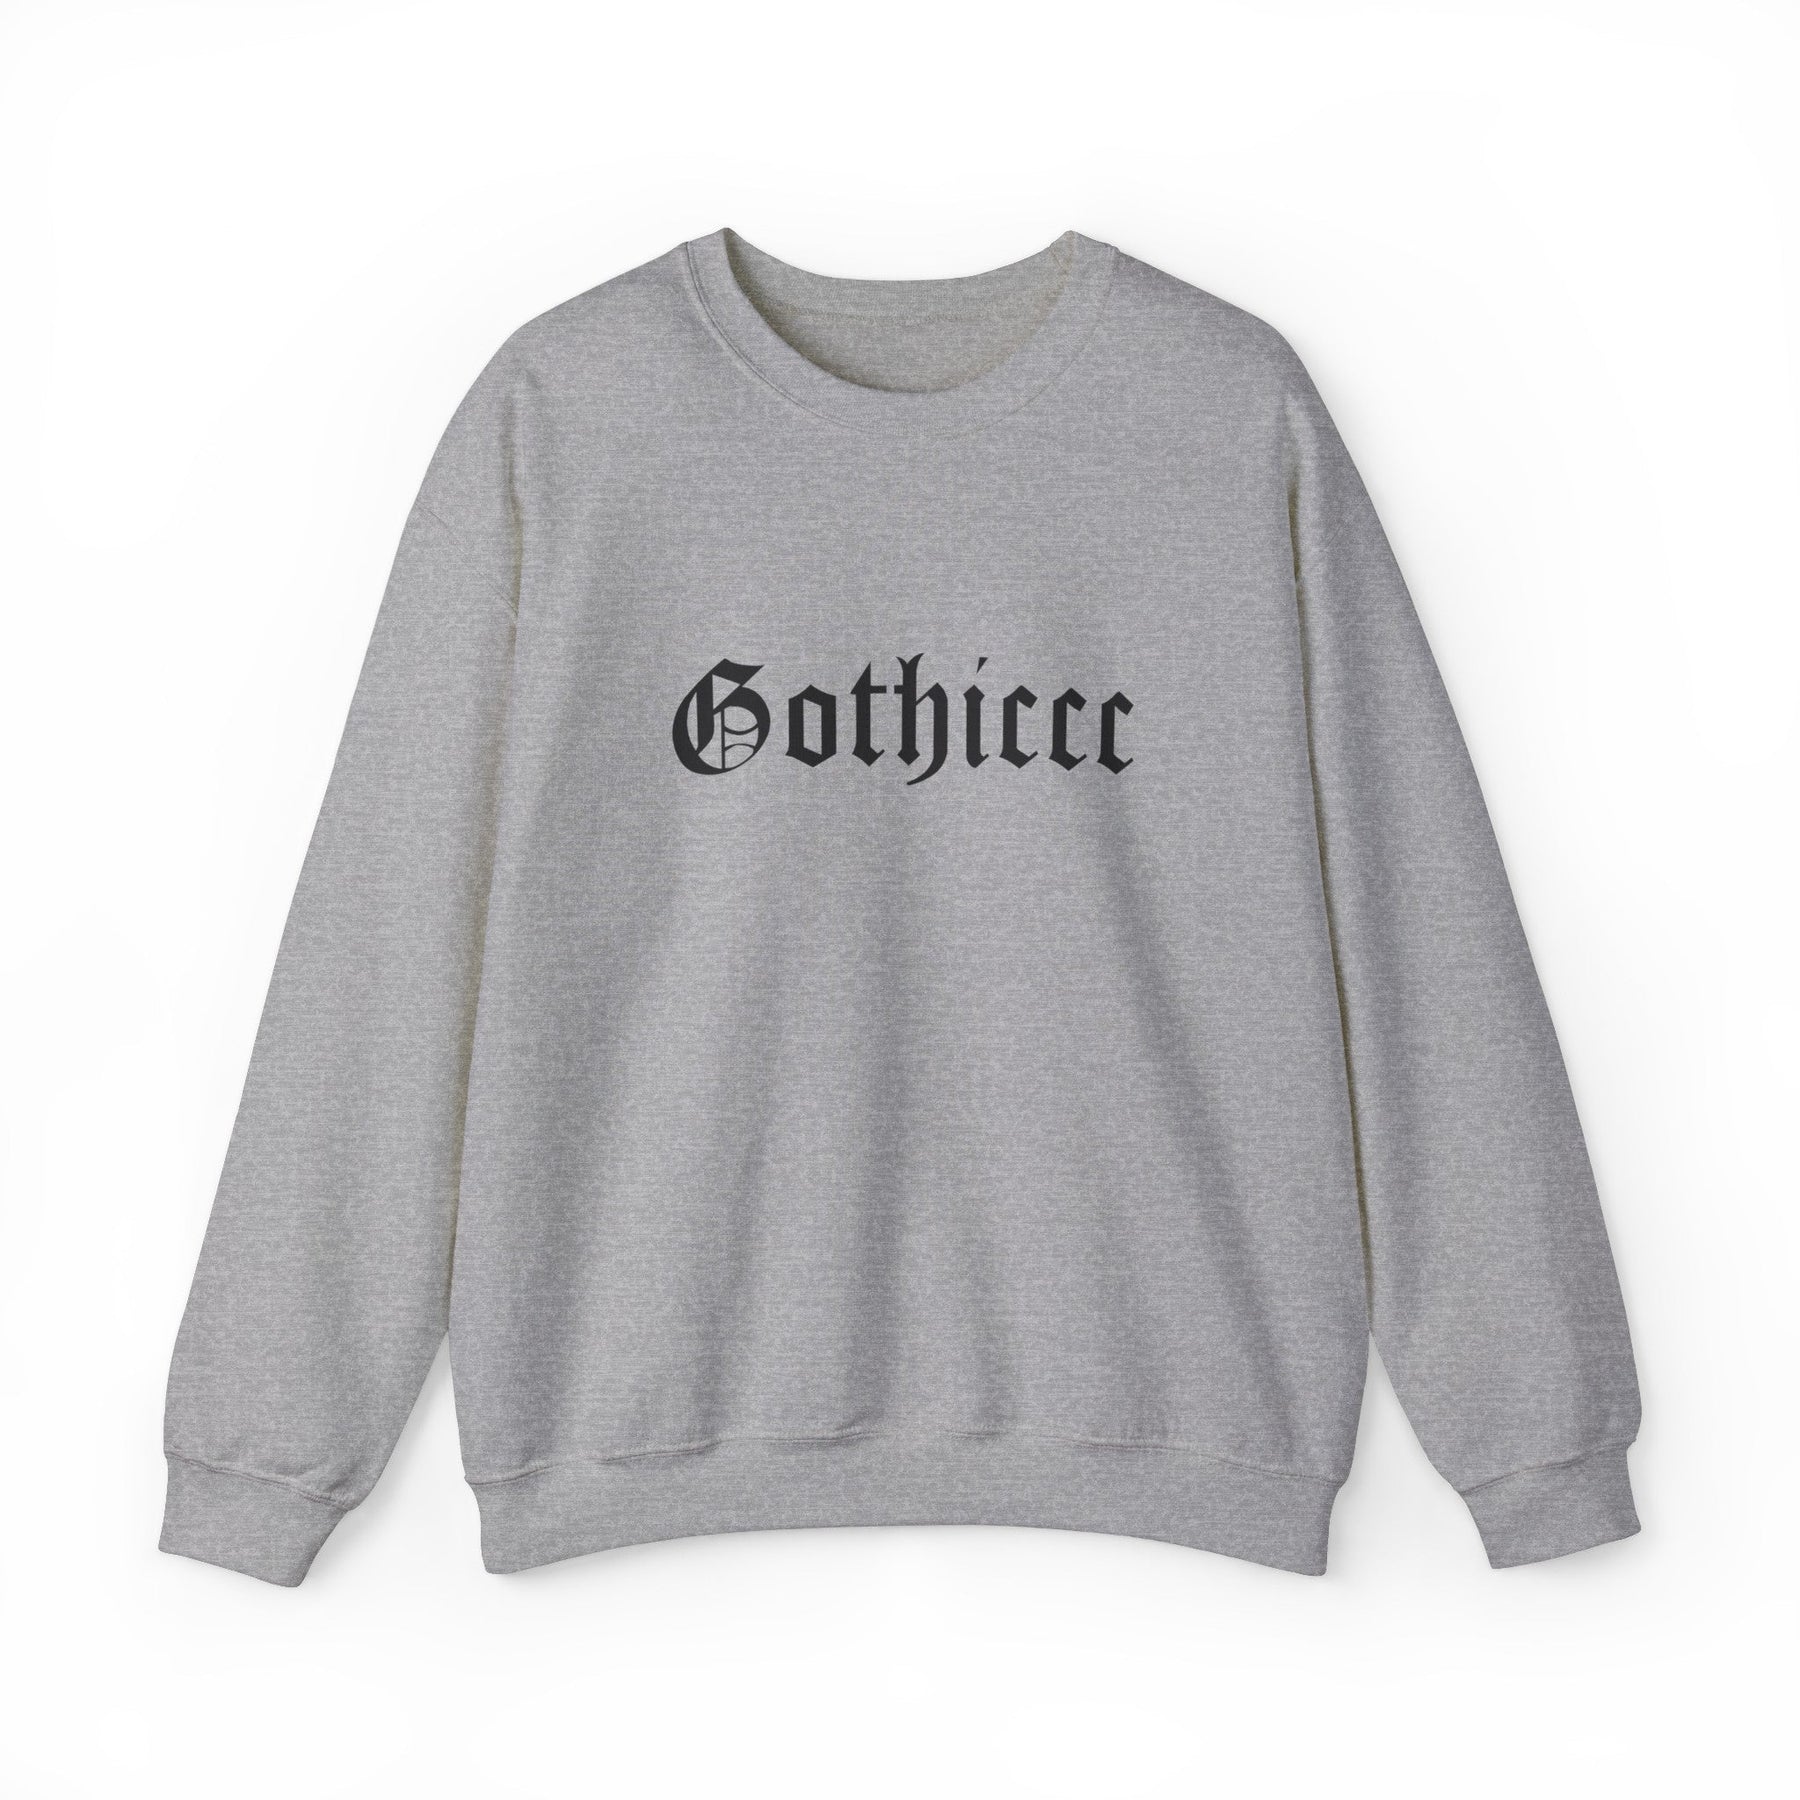 Gothiccc Long Sleeve Crew Neck Sweatshirt - Goth Cloth Co.Sweatshirt23707295680680484357